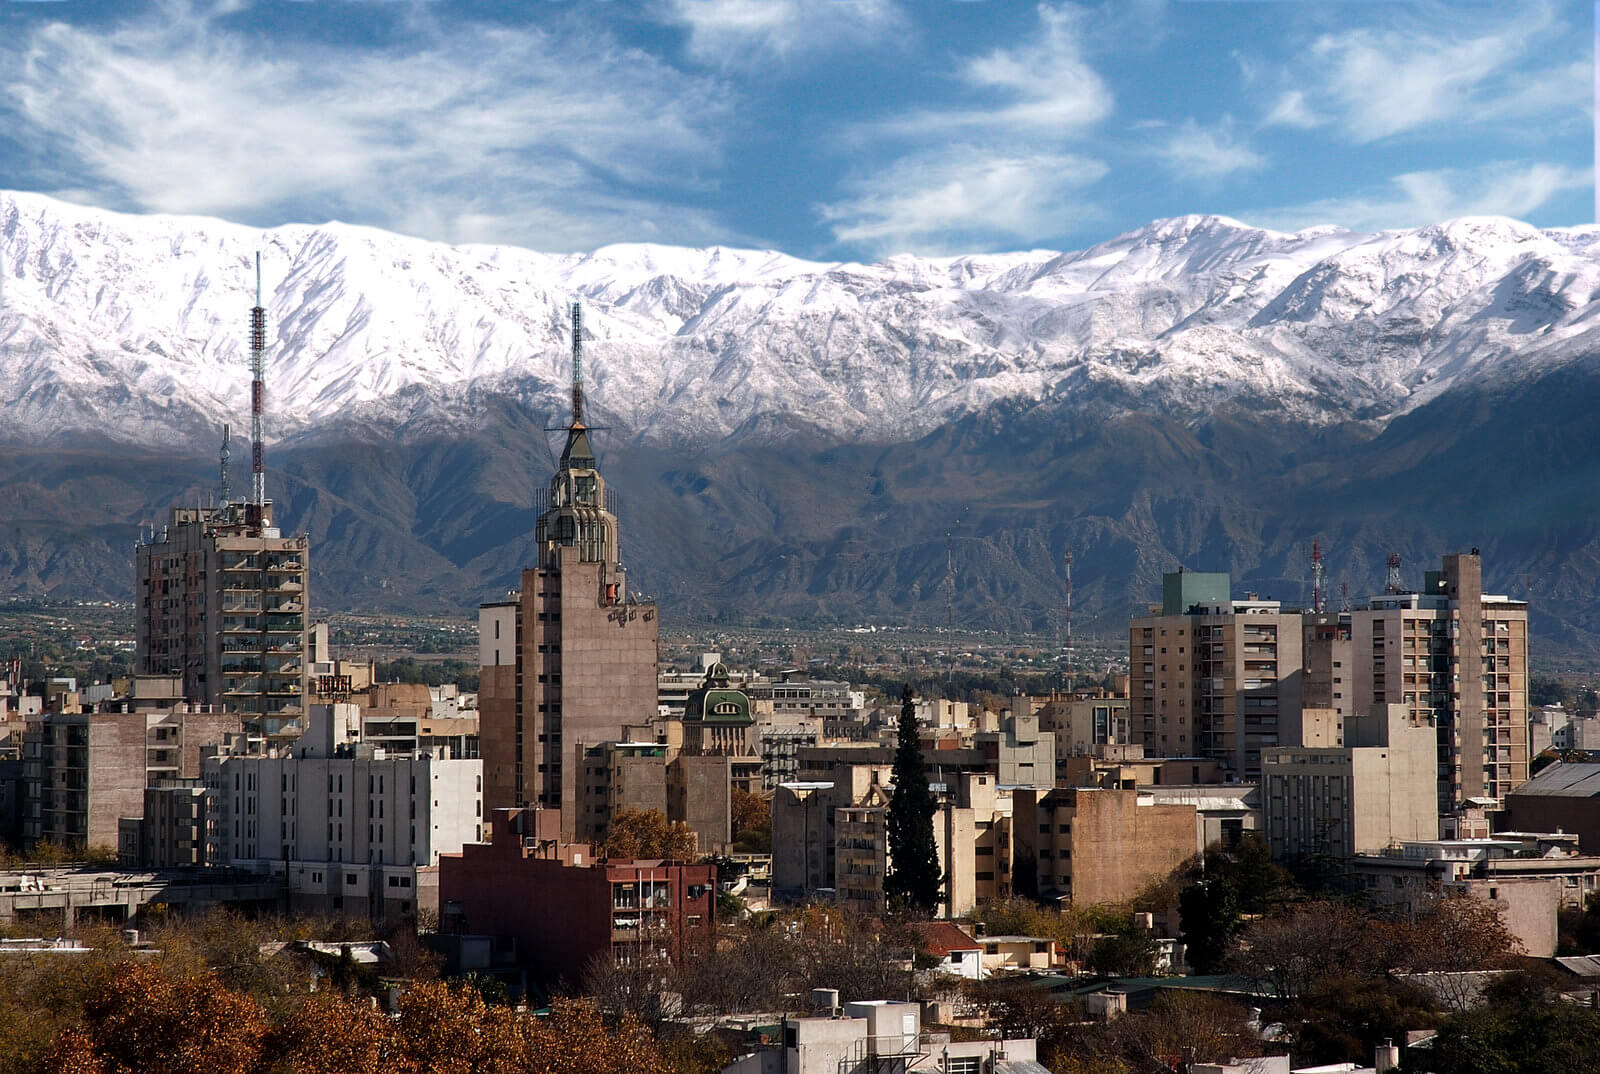 Mendoza city